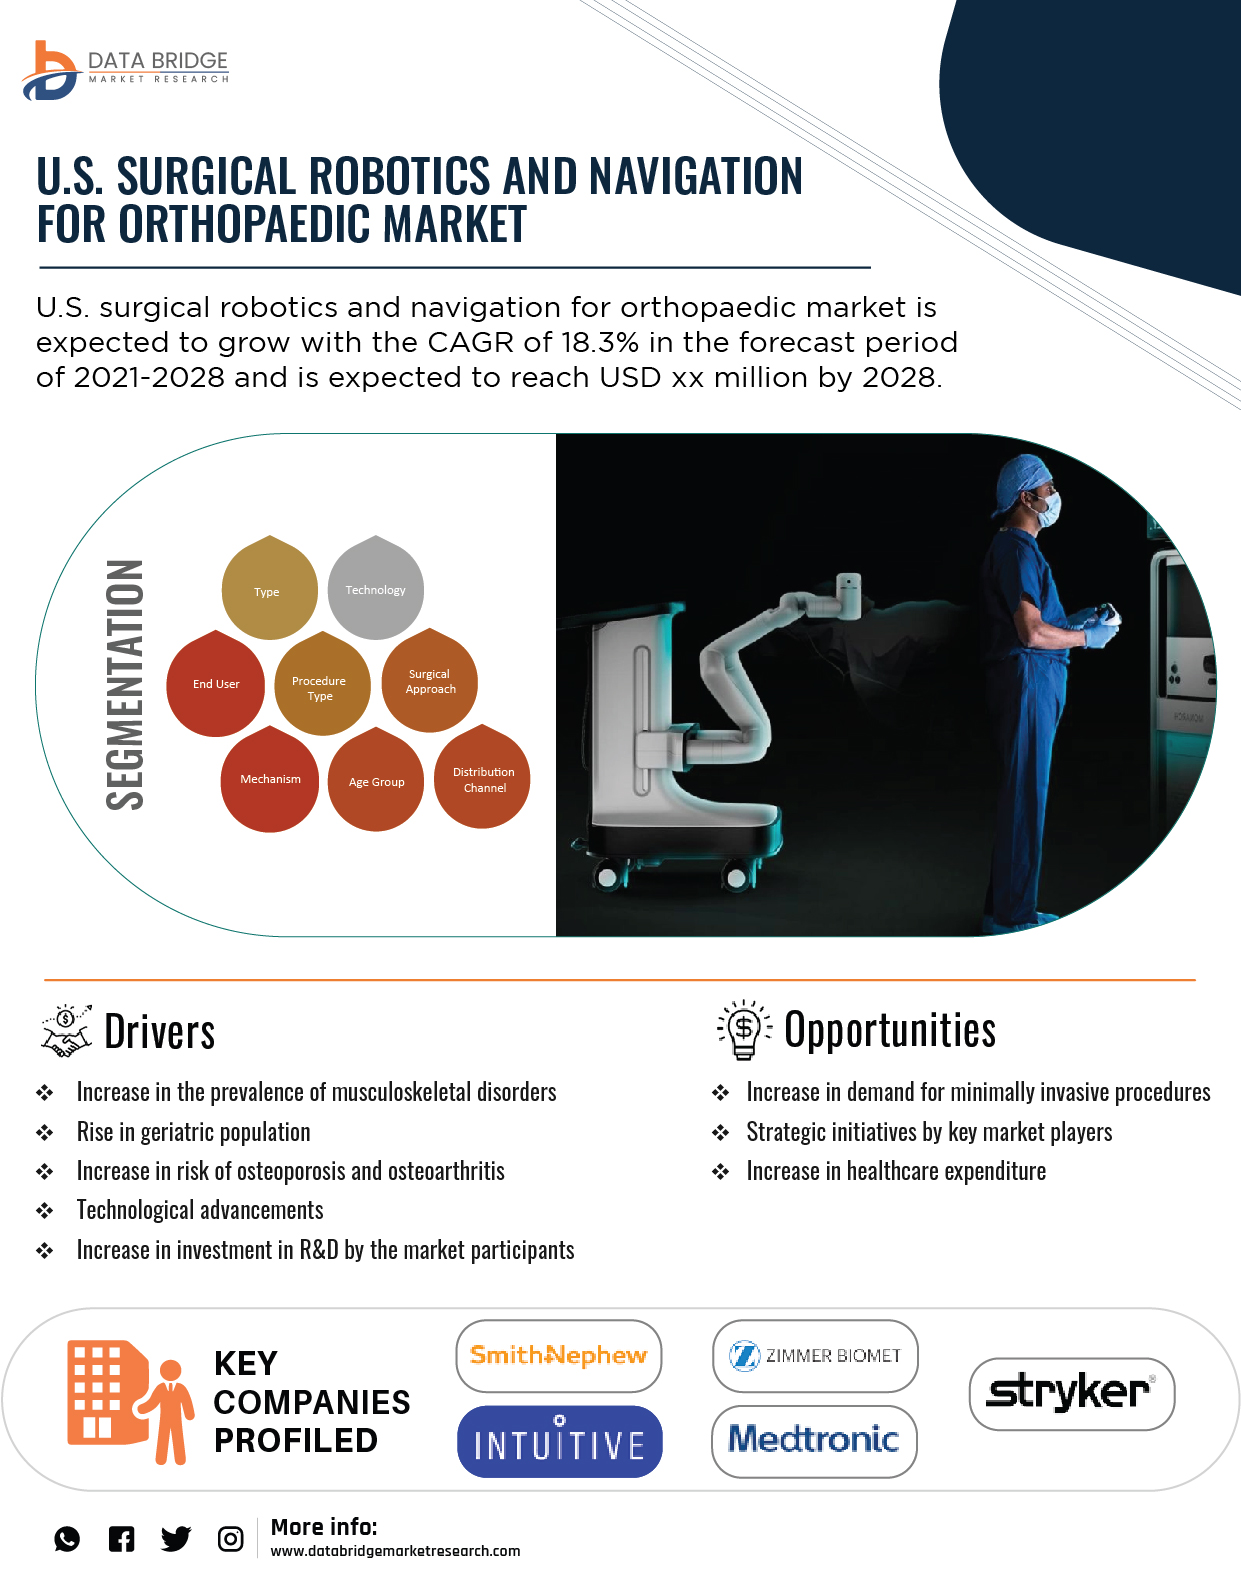 U.S. Surgical Robotics and Navigation for Orthopaedic Market